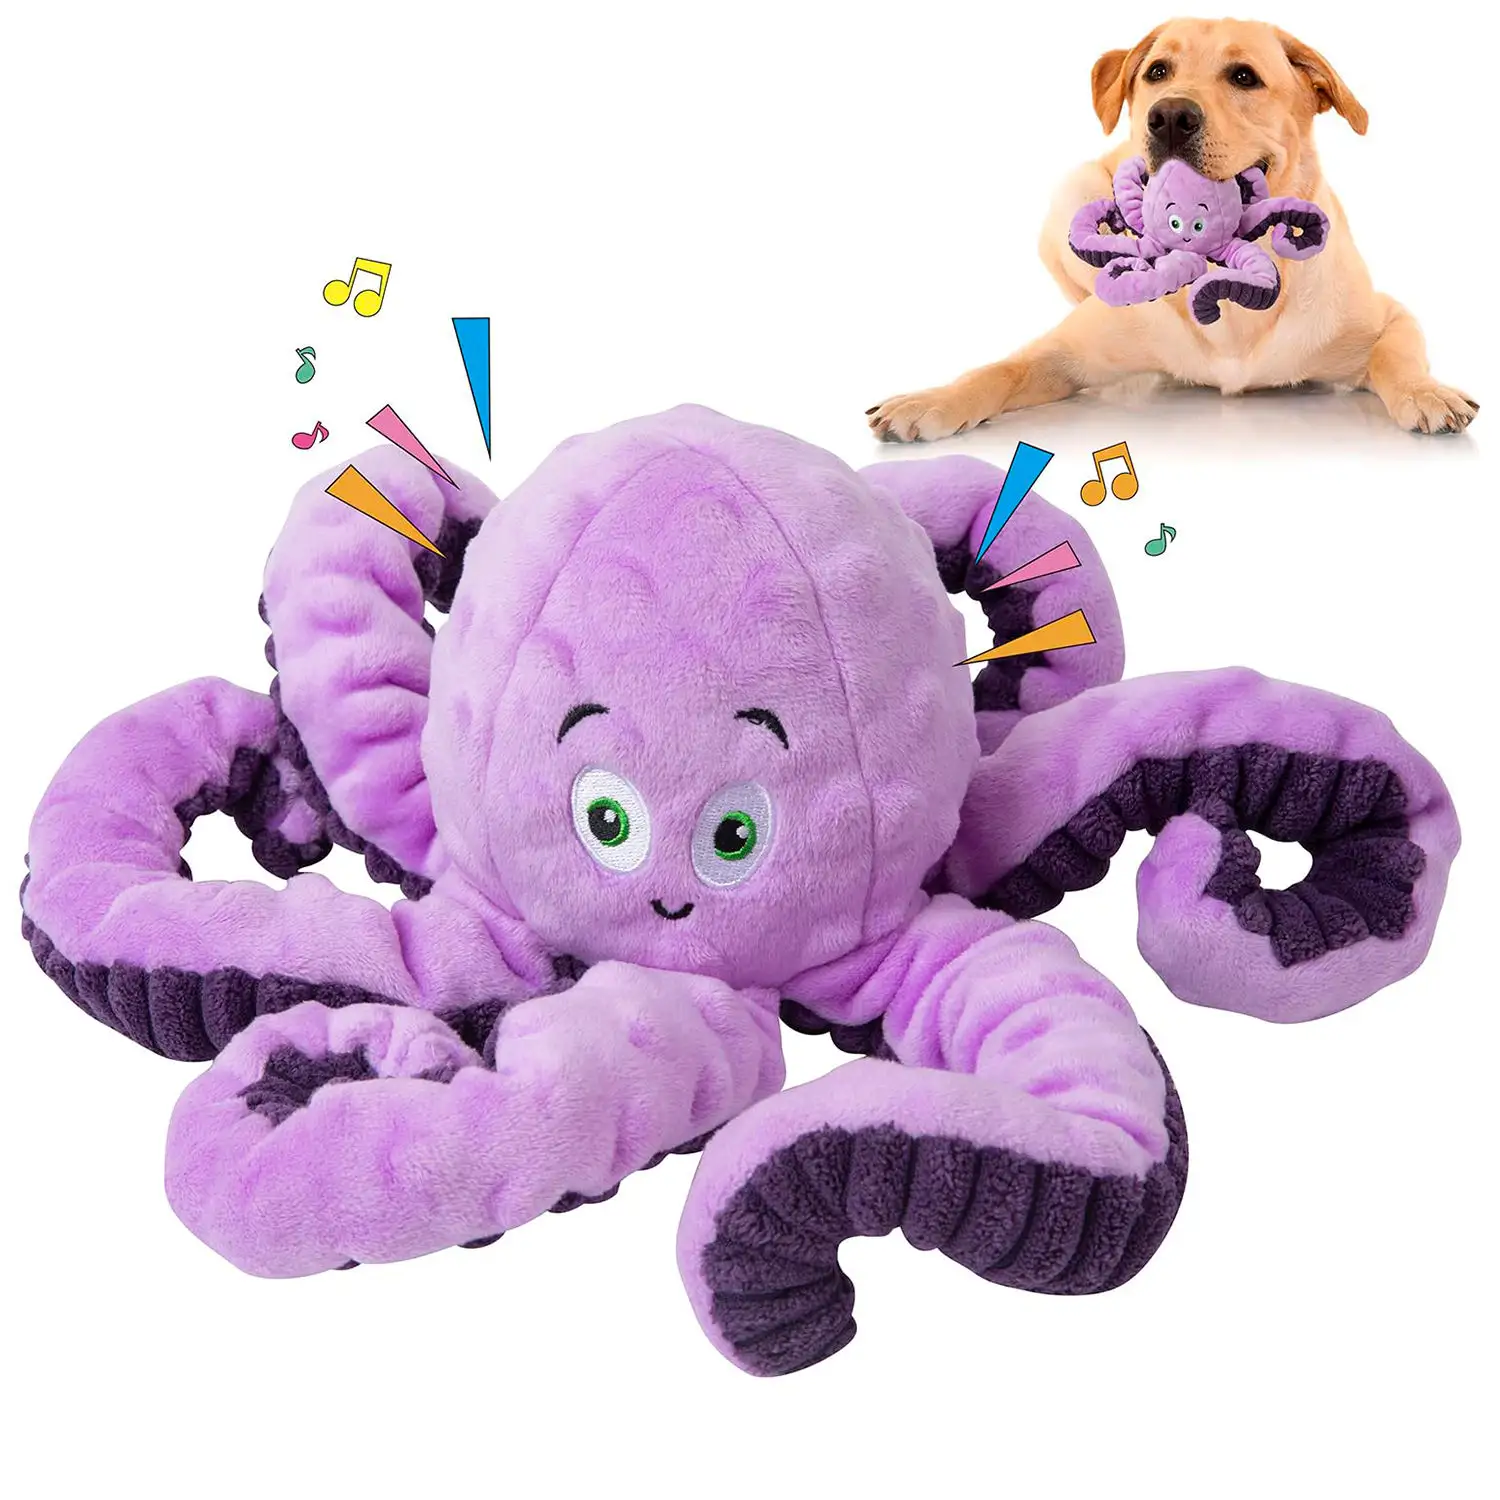 Großhandel individuelles Oktopus-Hundspielzeug knisternde lustige niedliche interaktive Hondspielzeuge Hundschuhe plüsch knisternde Spielzeug